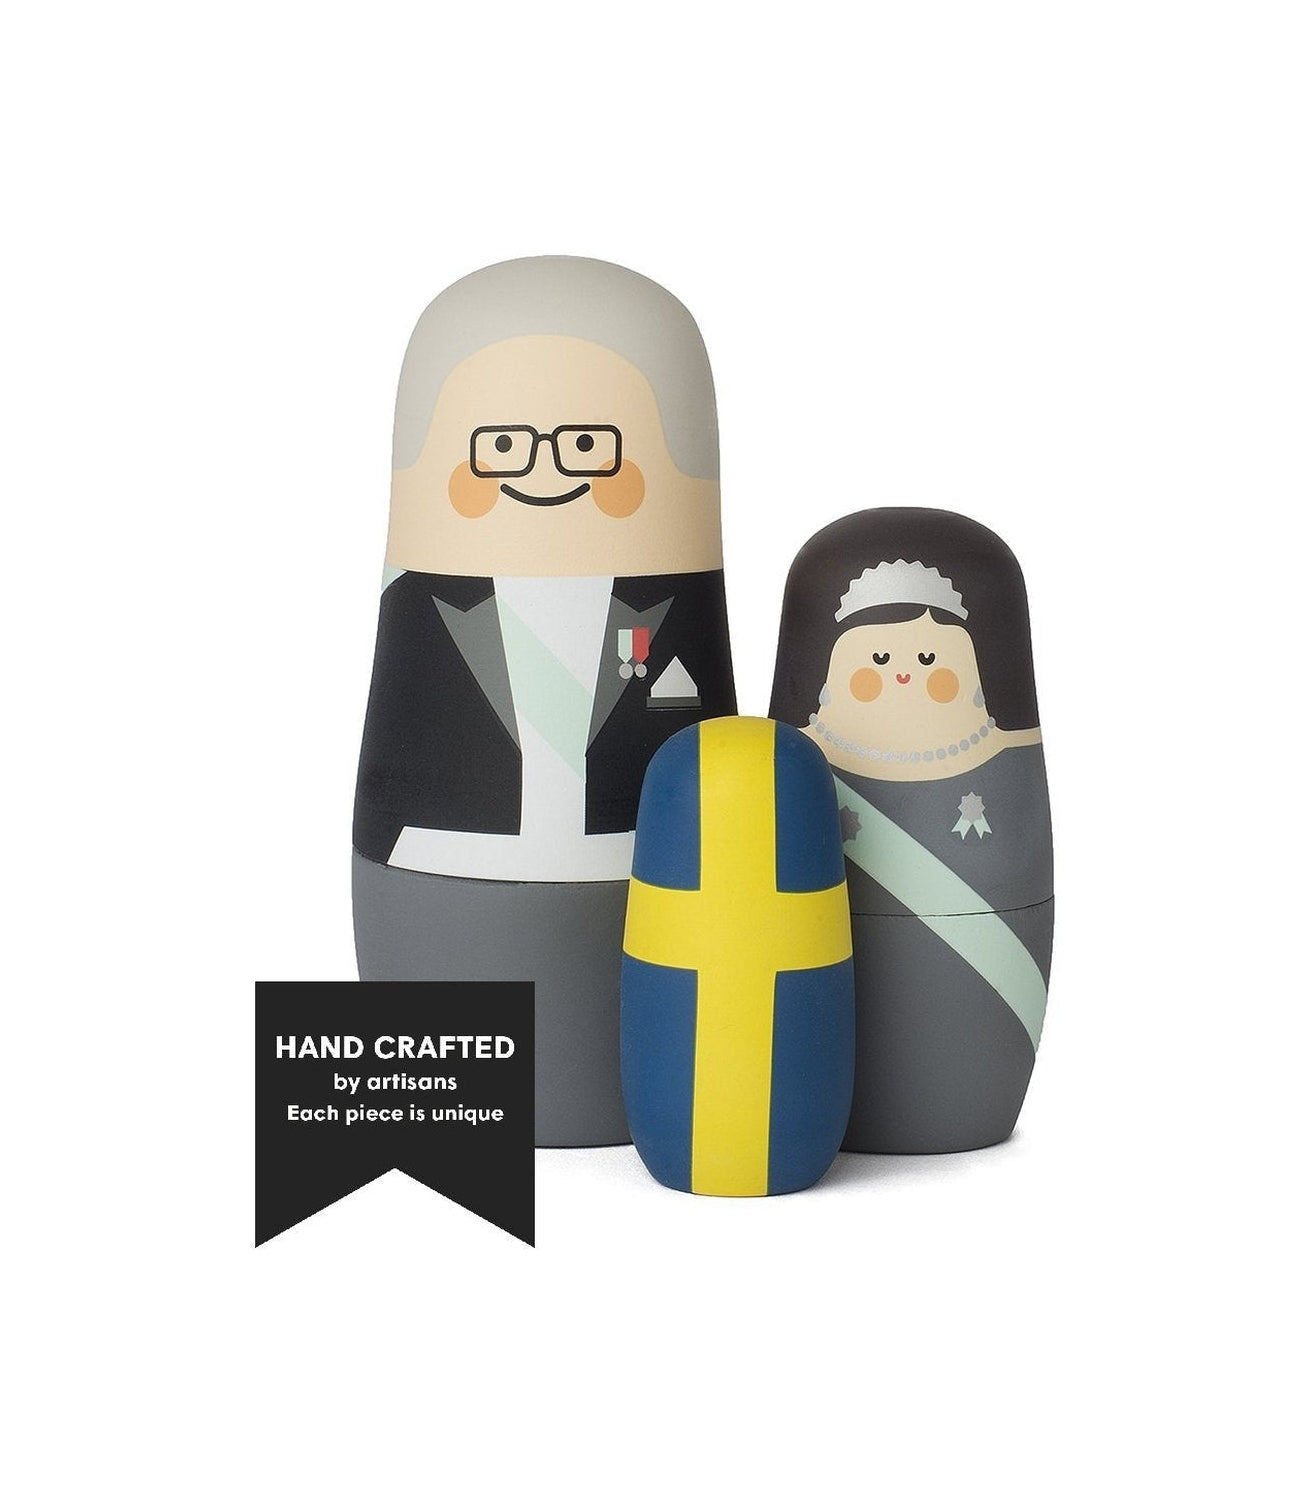 Forårskøbenhavnsudtryk svenske royalties matryoshka dukker